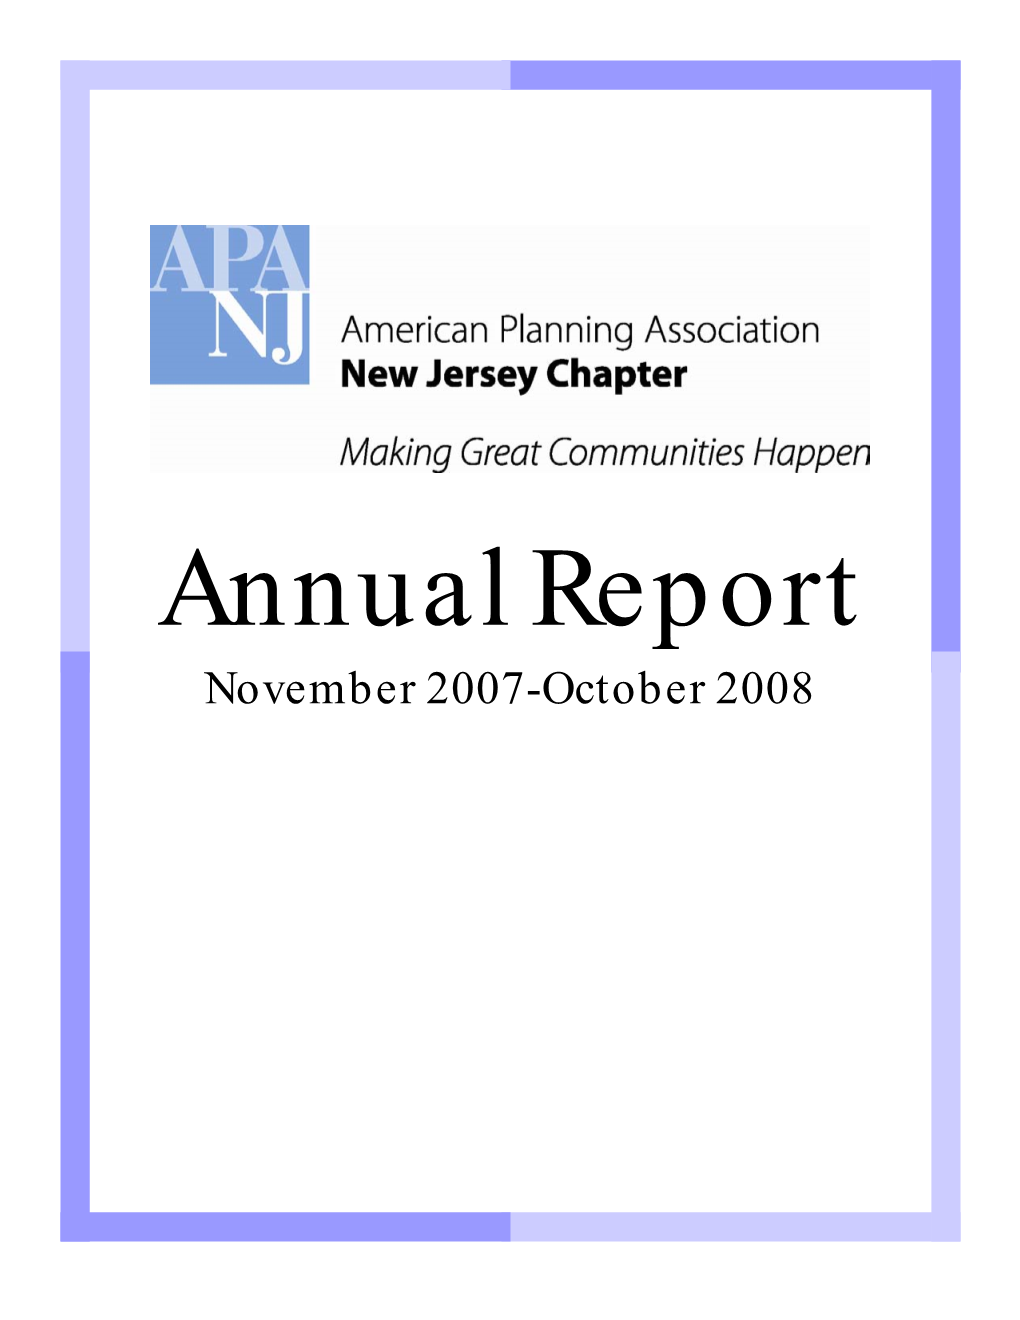 Annual Report November 2007-October 2008